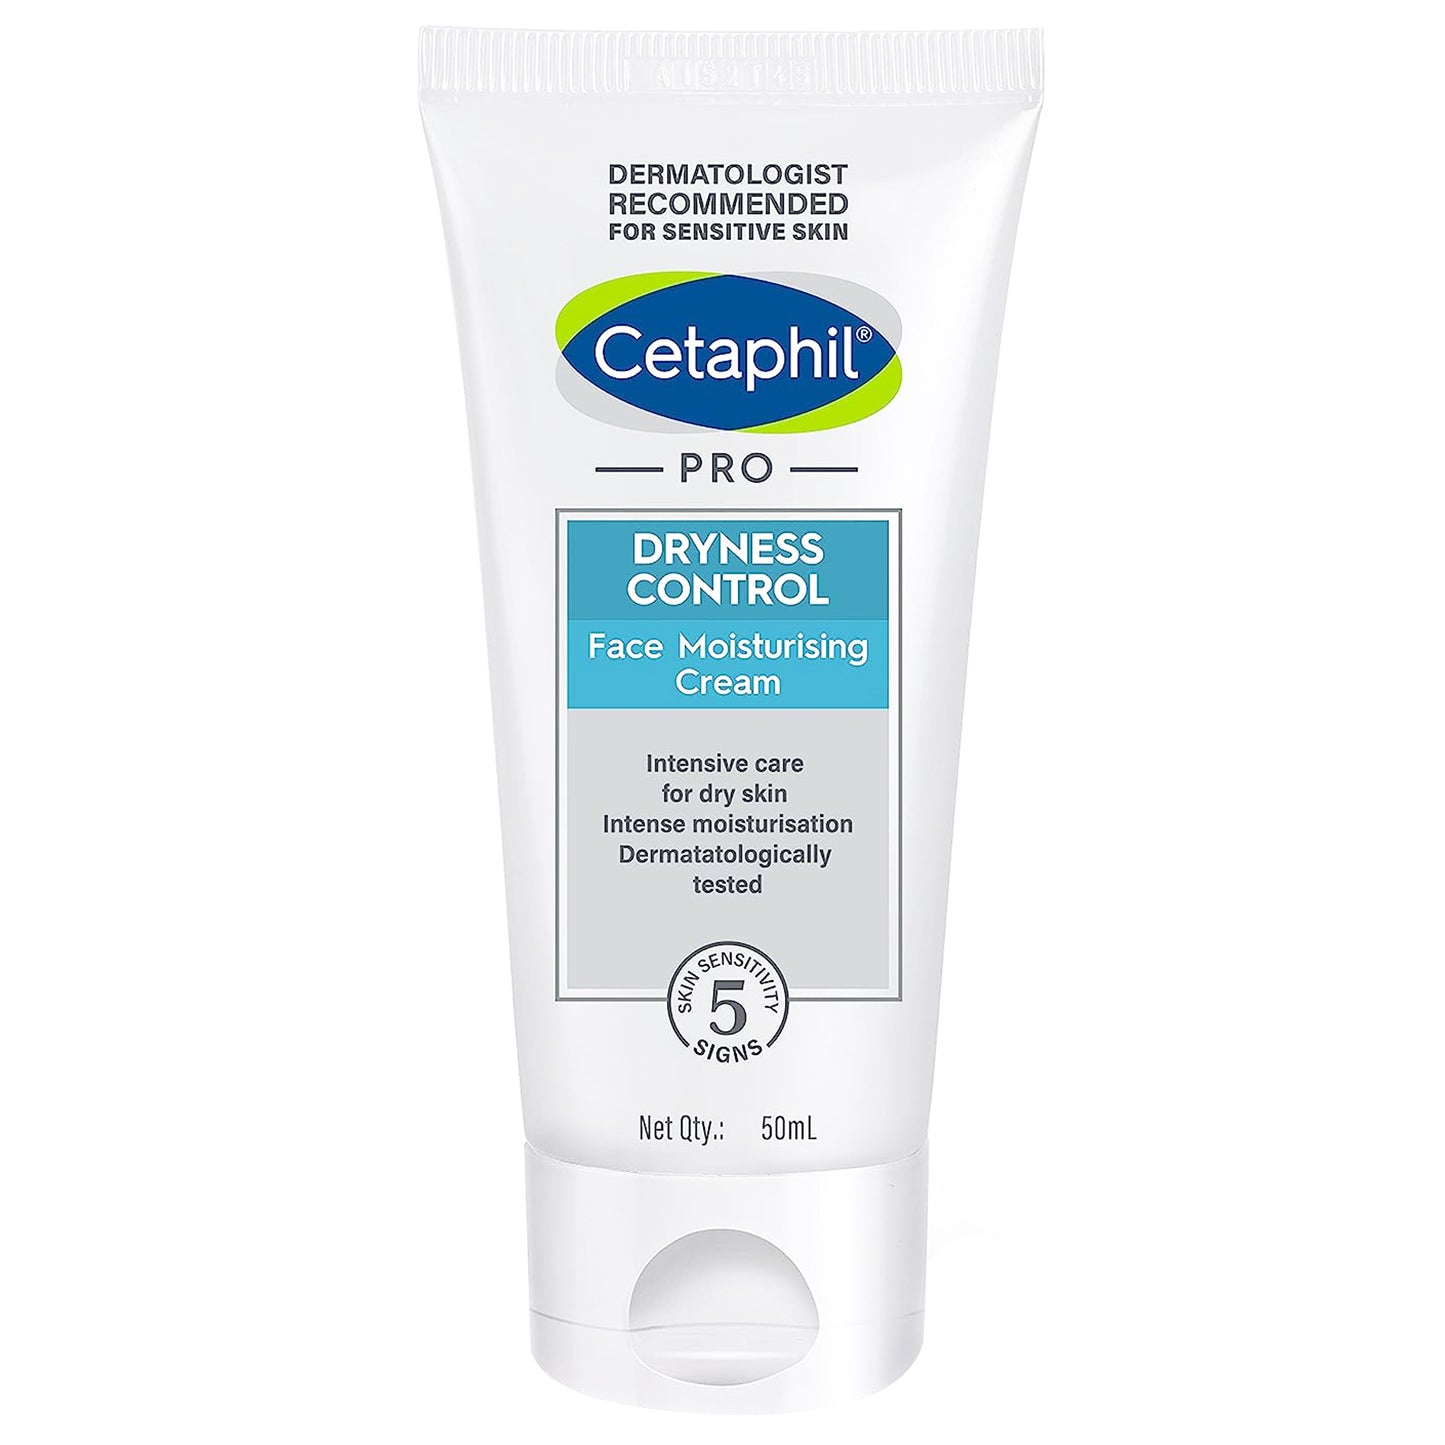 Cetaphil PRO Dryness Control Face Moisturizing Cream, 50ml